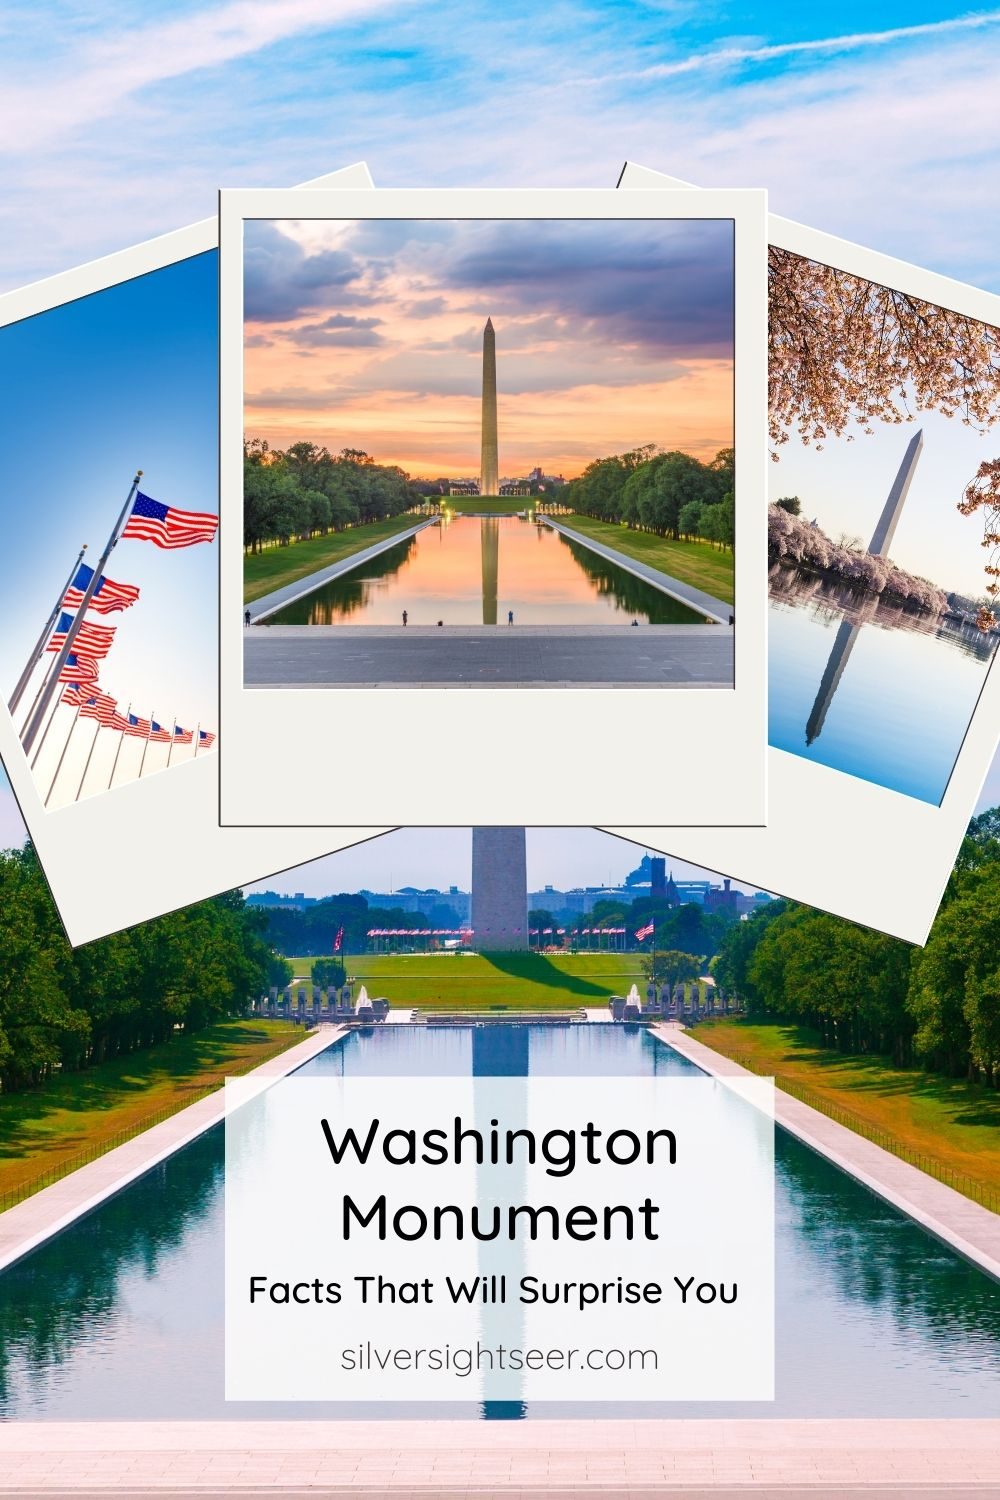 Washington Monument Facts - New Pin 1 - JPG